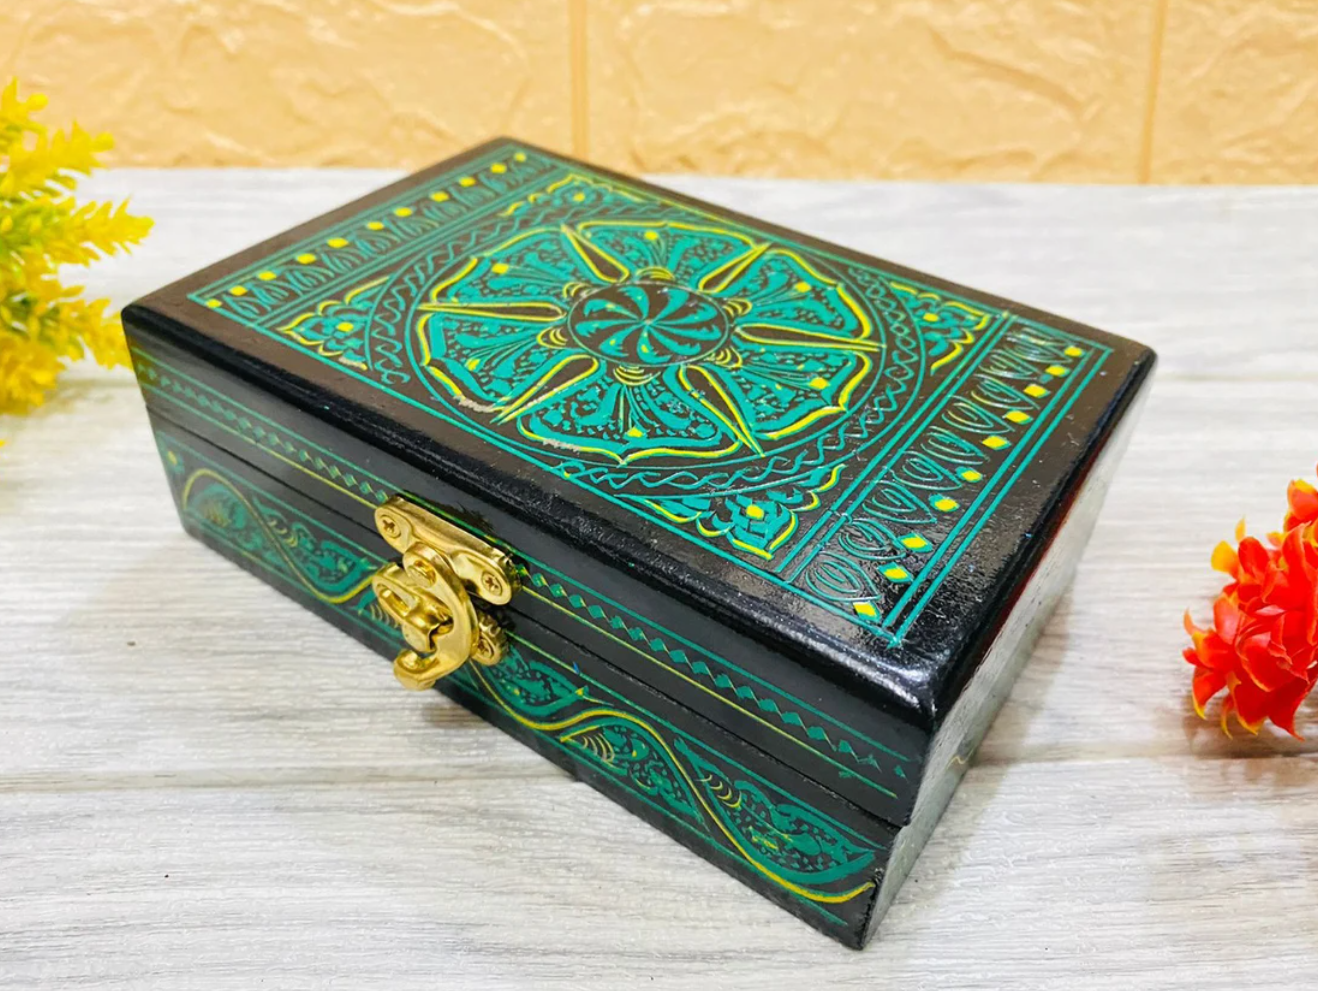 Large Laquer Art Jewelry Box - Green I Lauqer art Craft Decorative Accent I handpainted handcrafted I Sheesham Wood ( RoseWood) I Pakistani Artisan Design